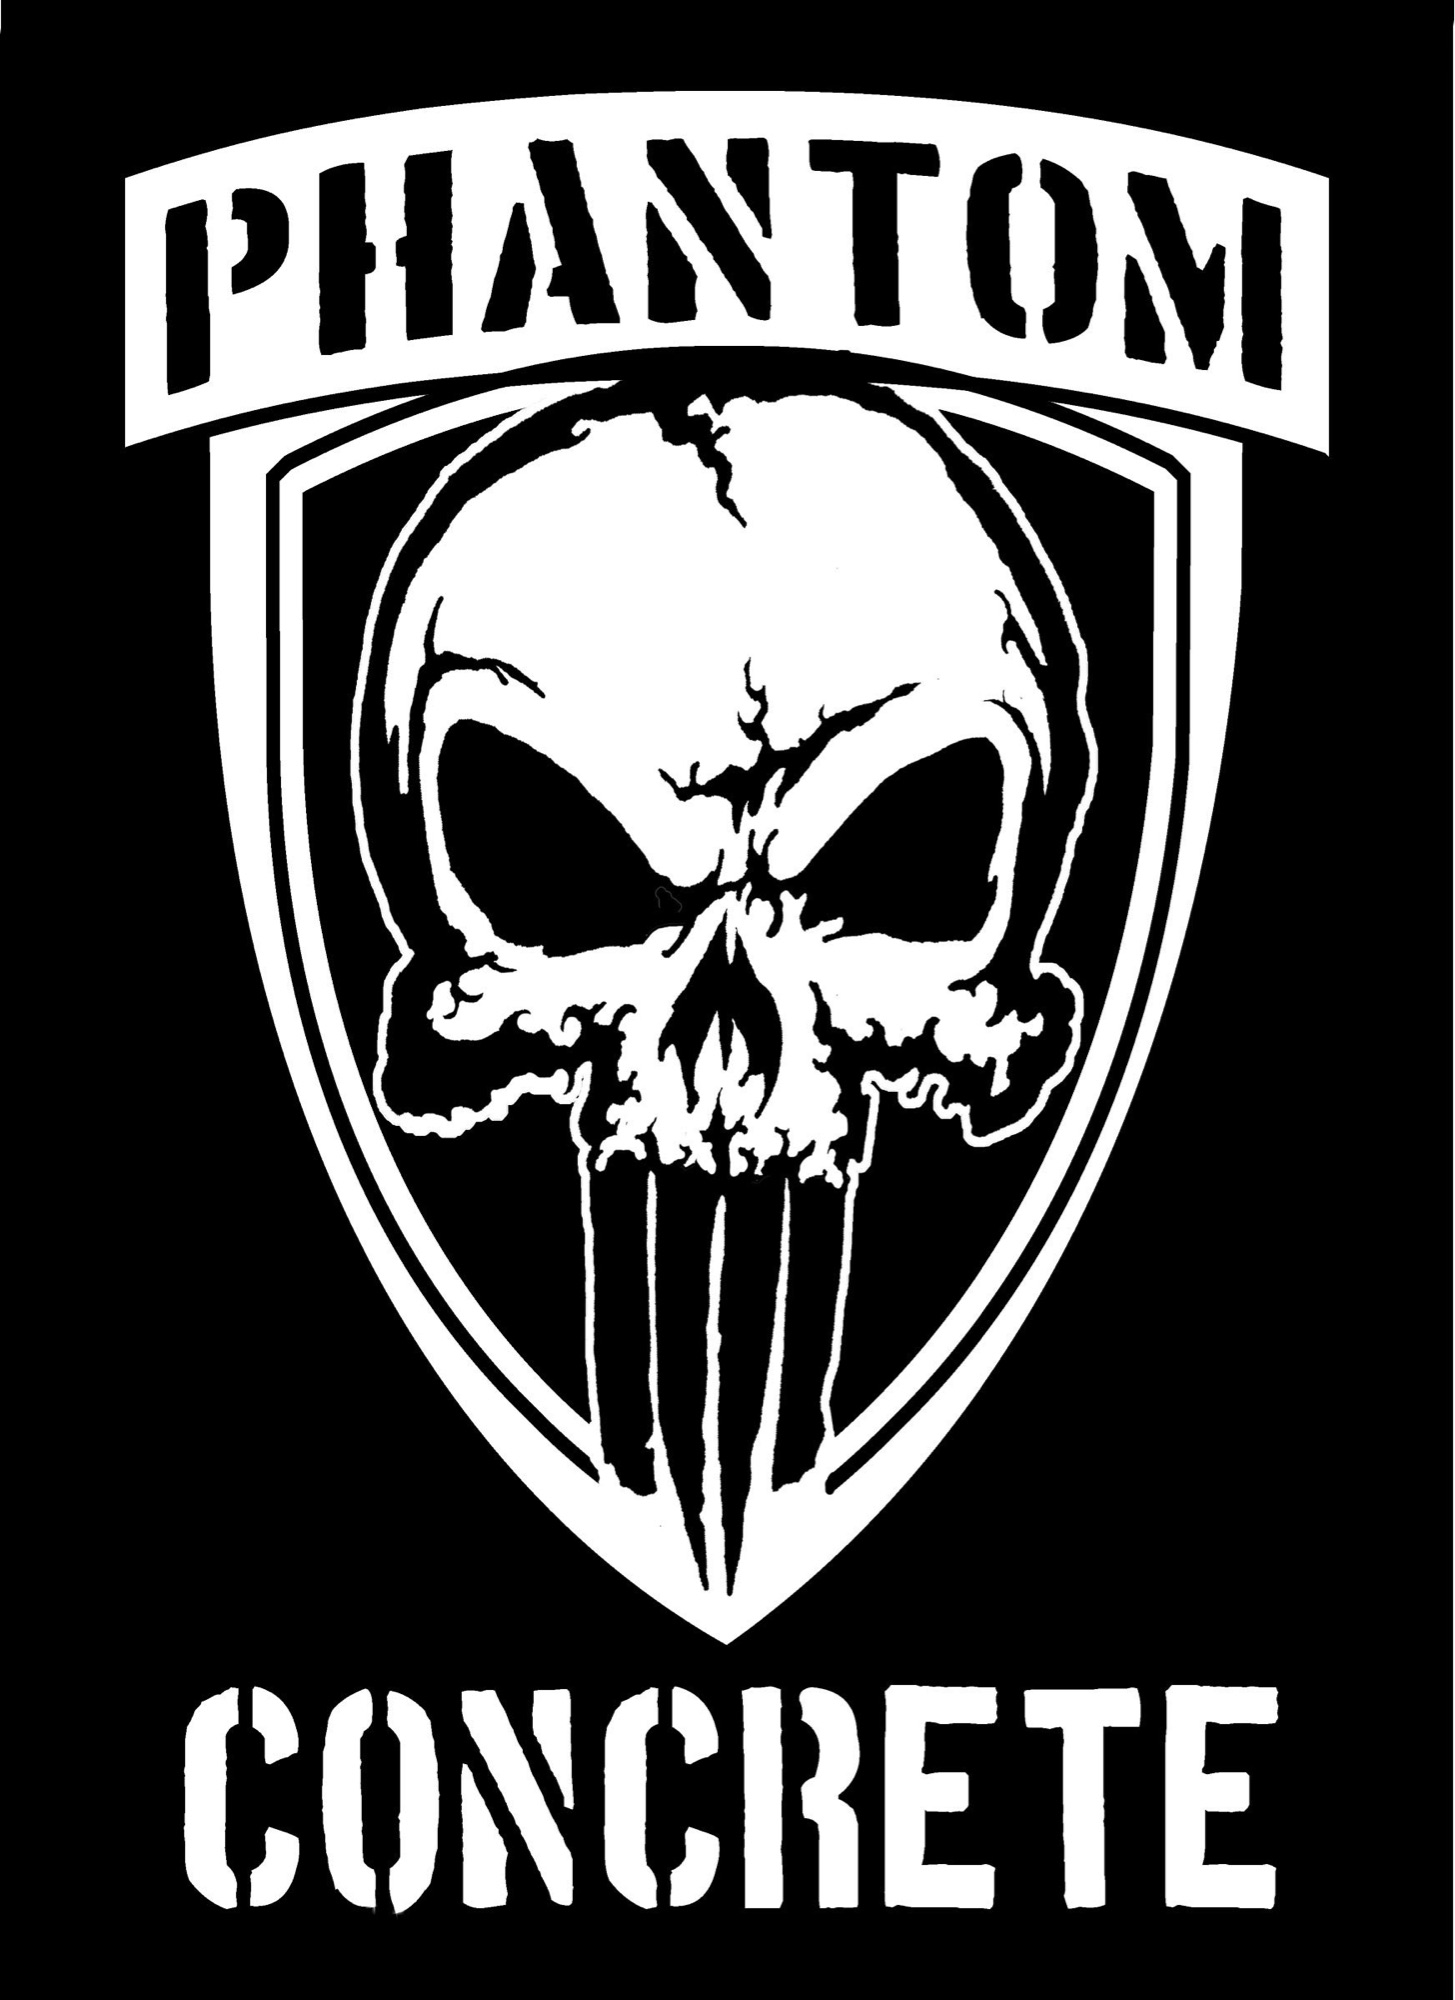 Phantom Concrete, LLC Logo